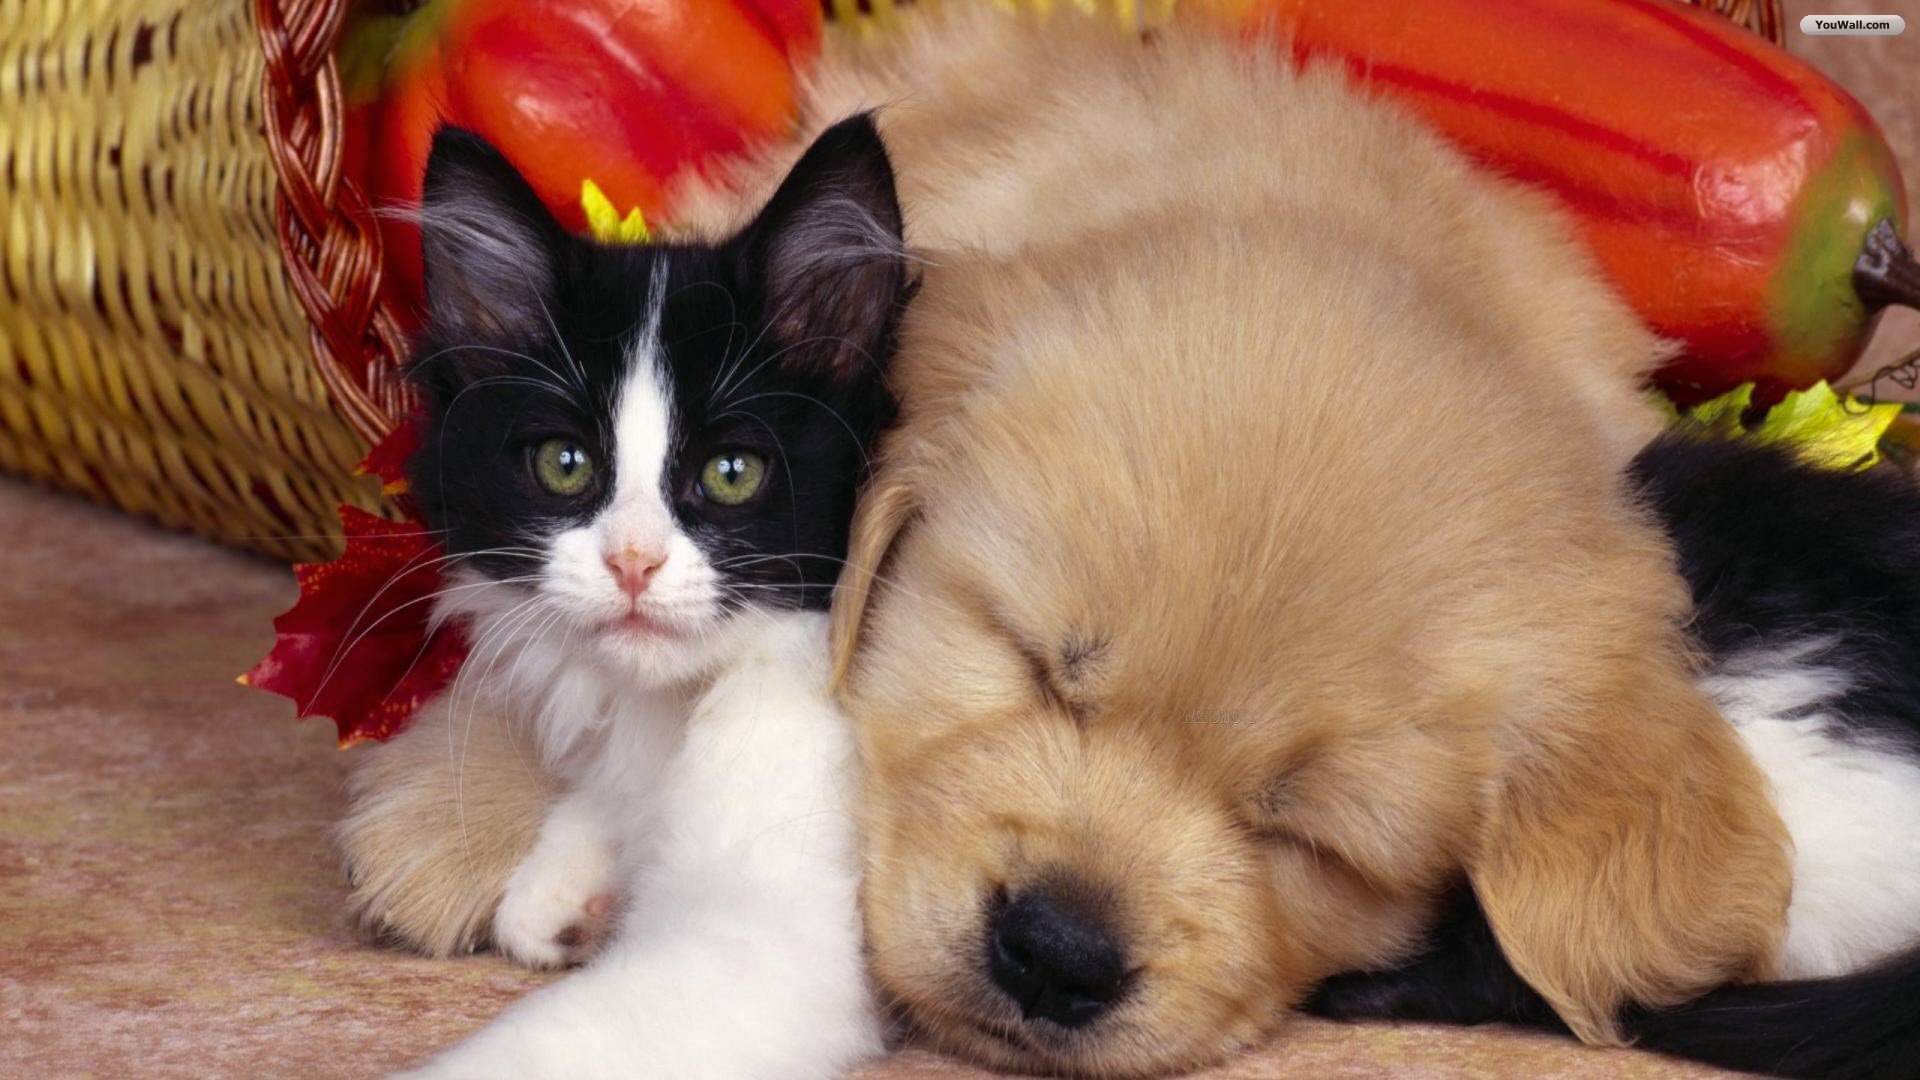 Cute Dog And Cat Wallpaper - Pixelstalk.net